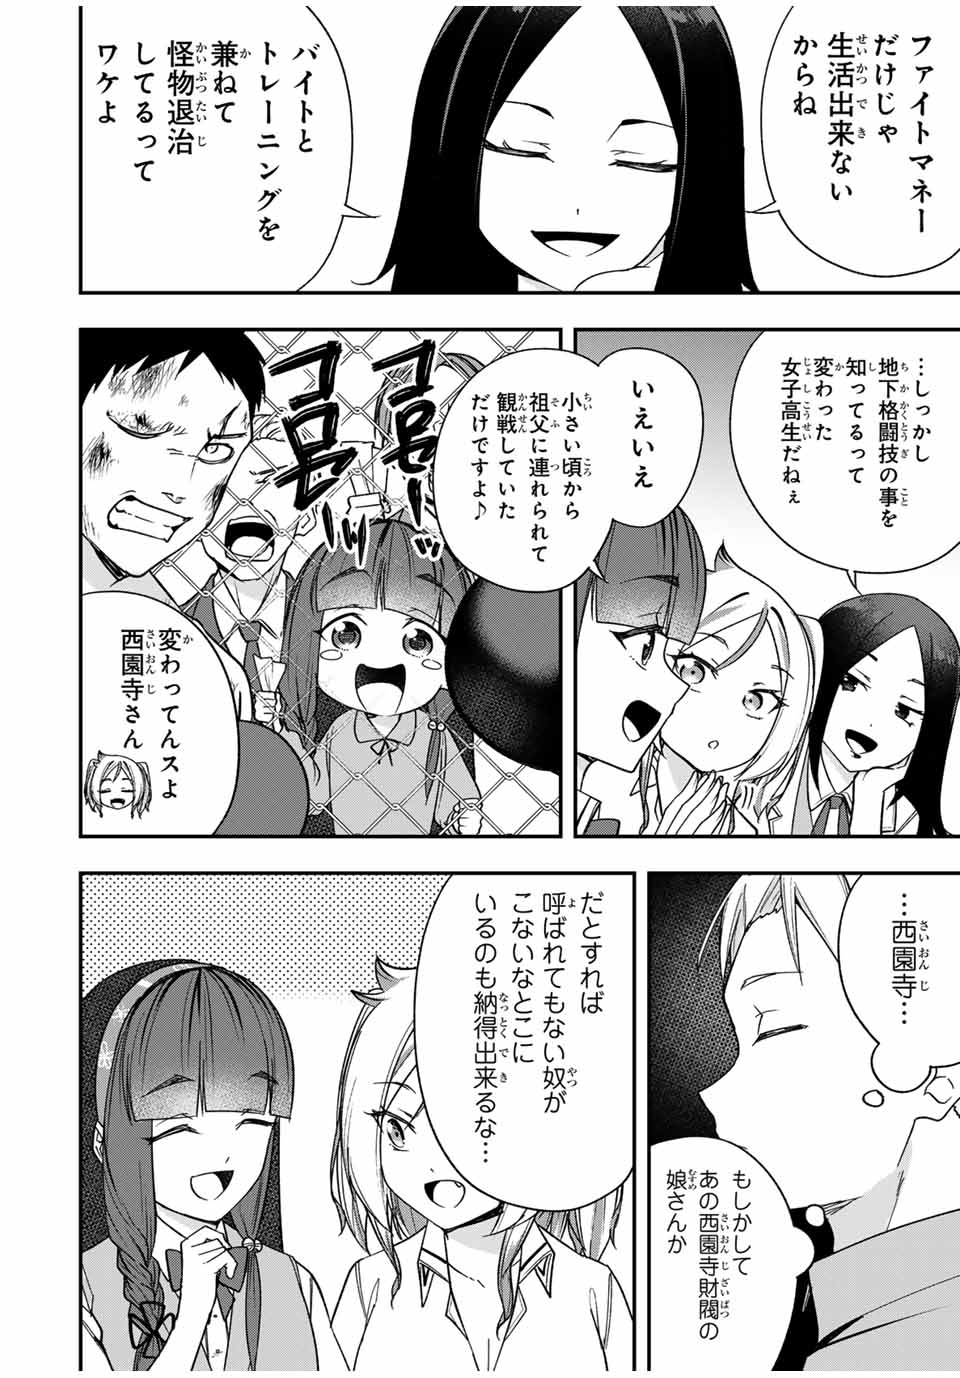 Heroine wa xx Okasegitai - Chapter 12 - Page 6